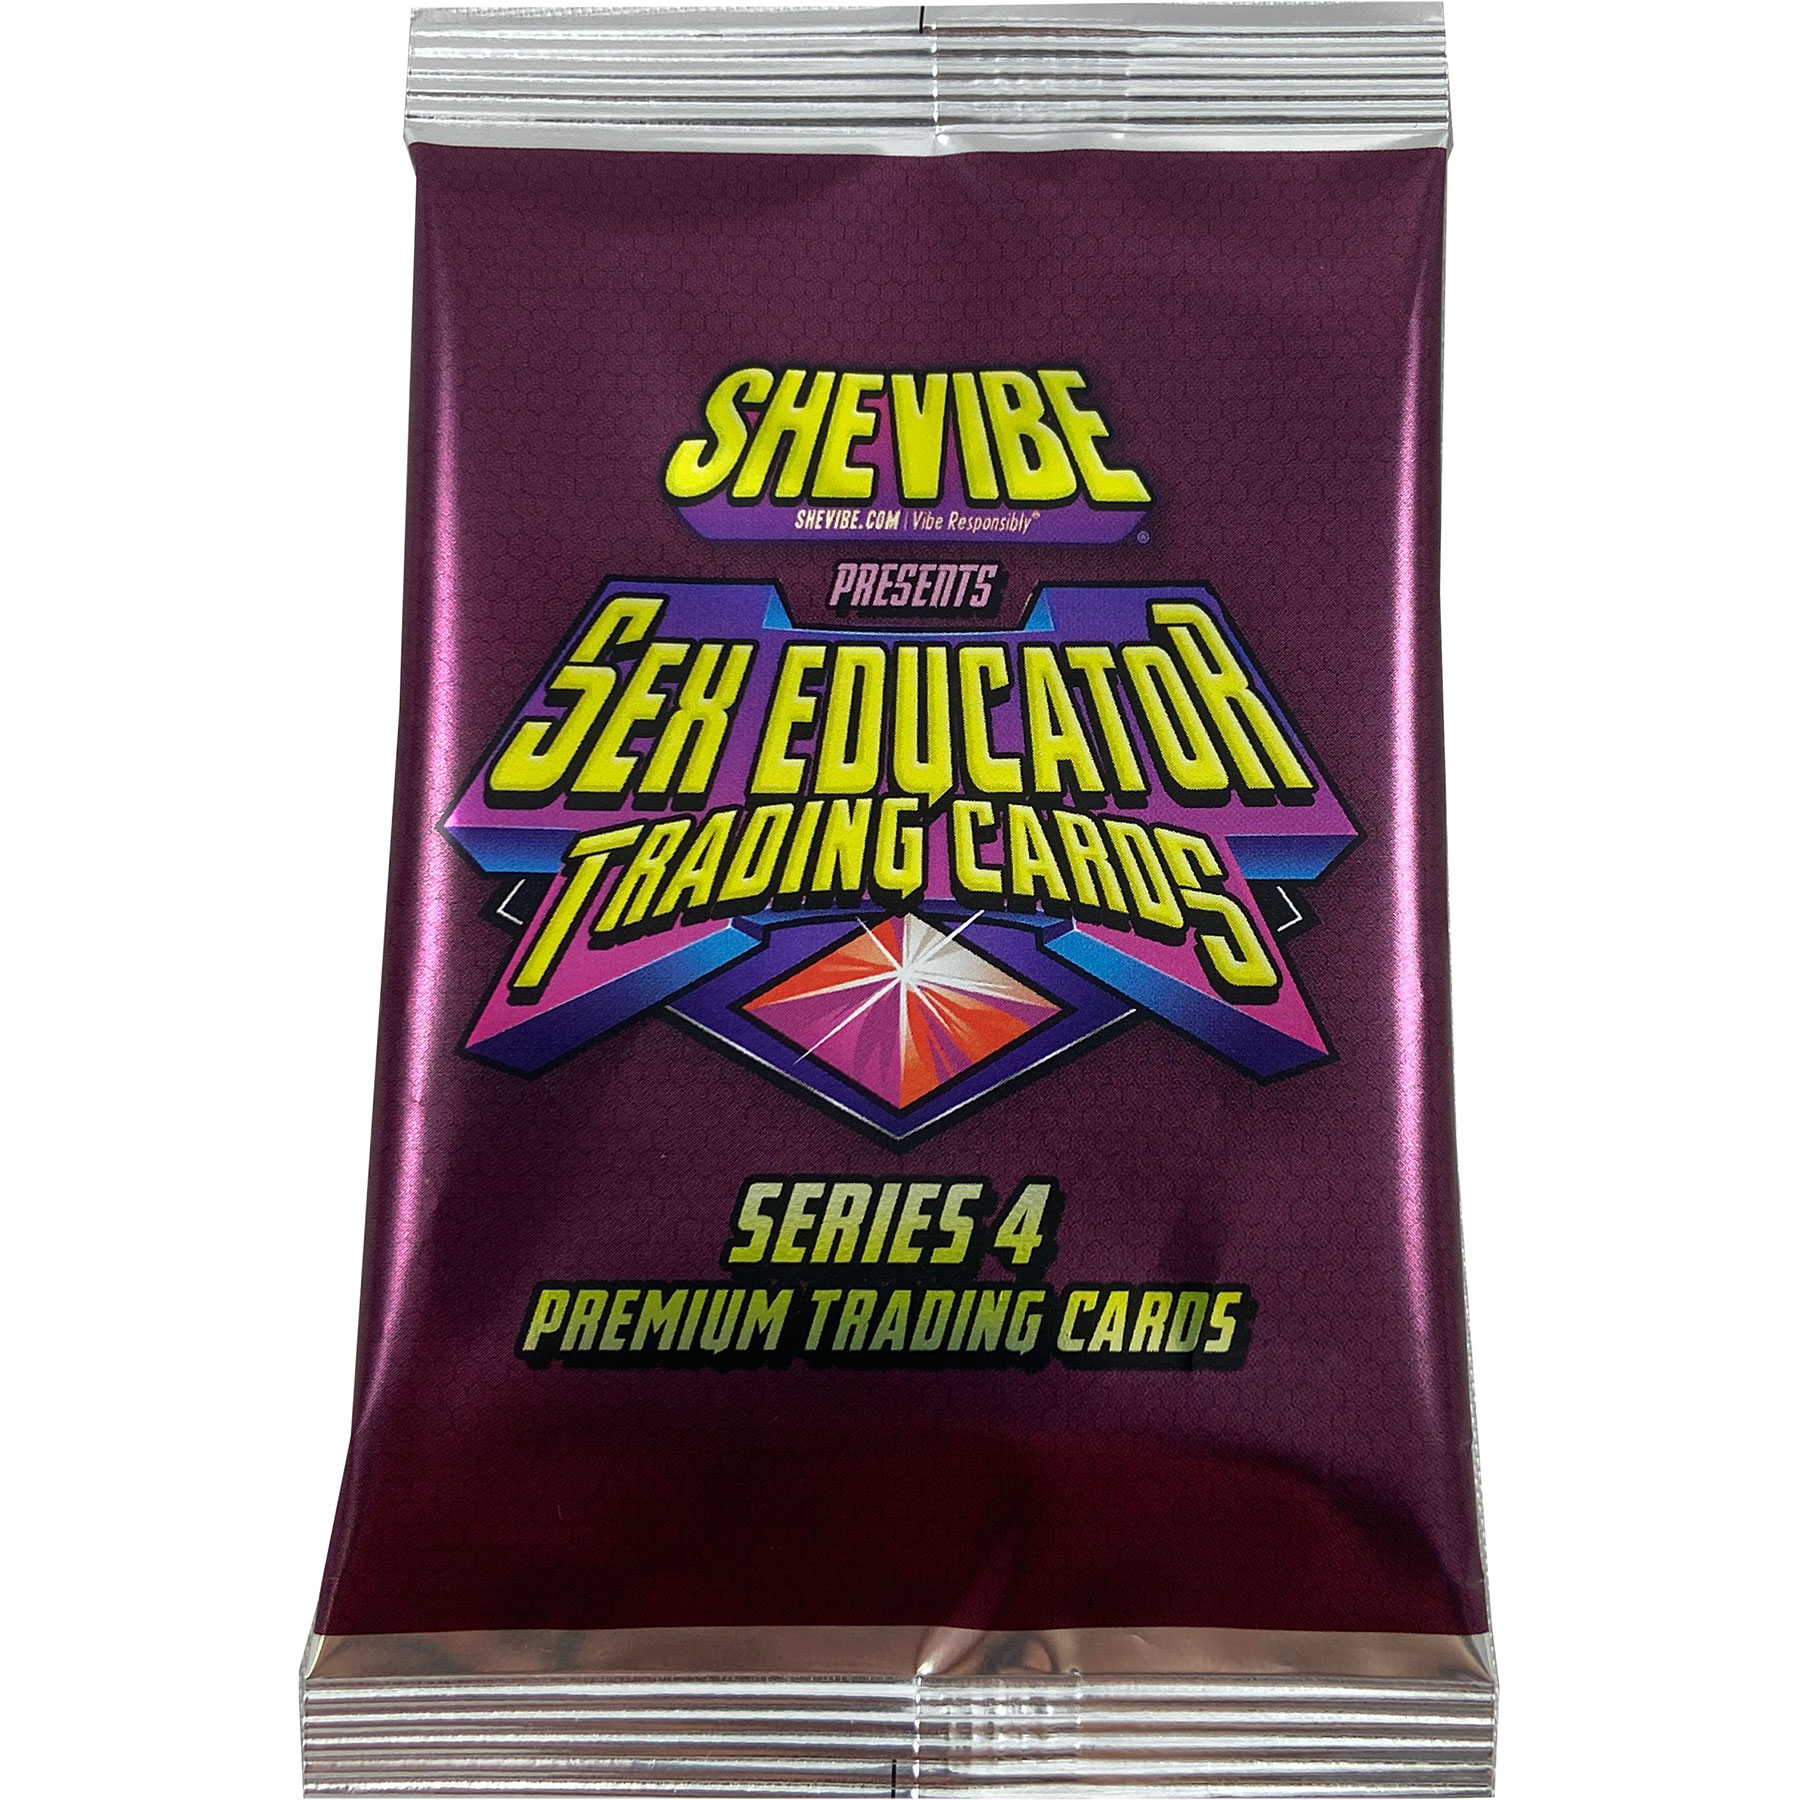 SheVibe Sex Educator Trading Card Set - Series 4 Heroes